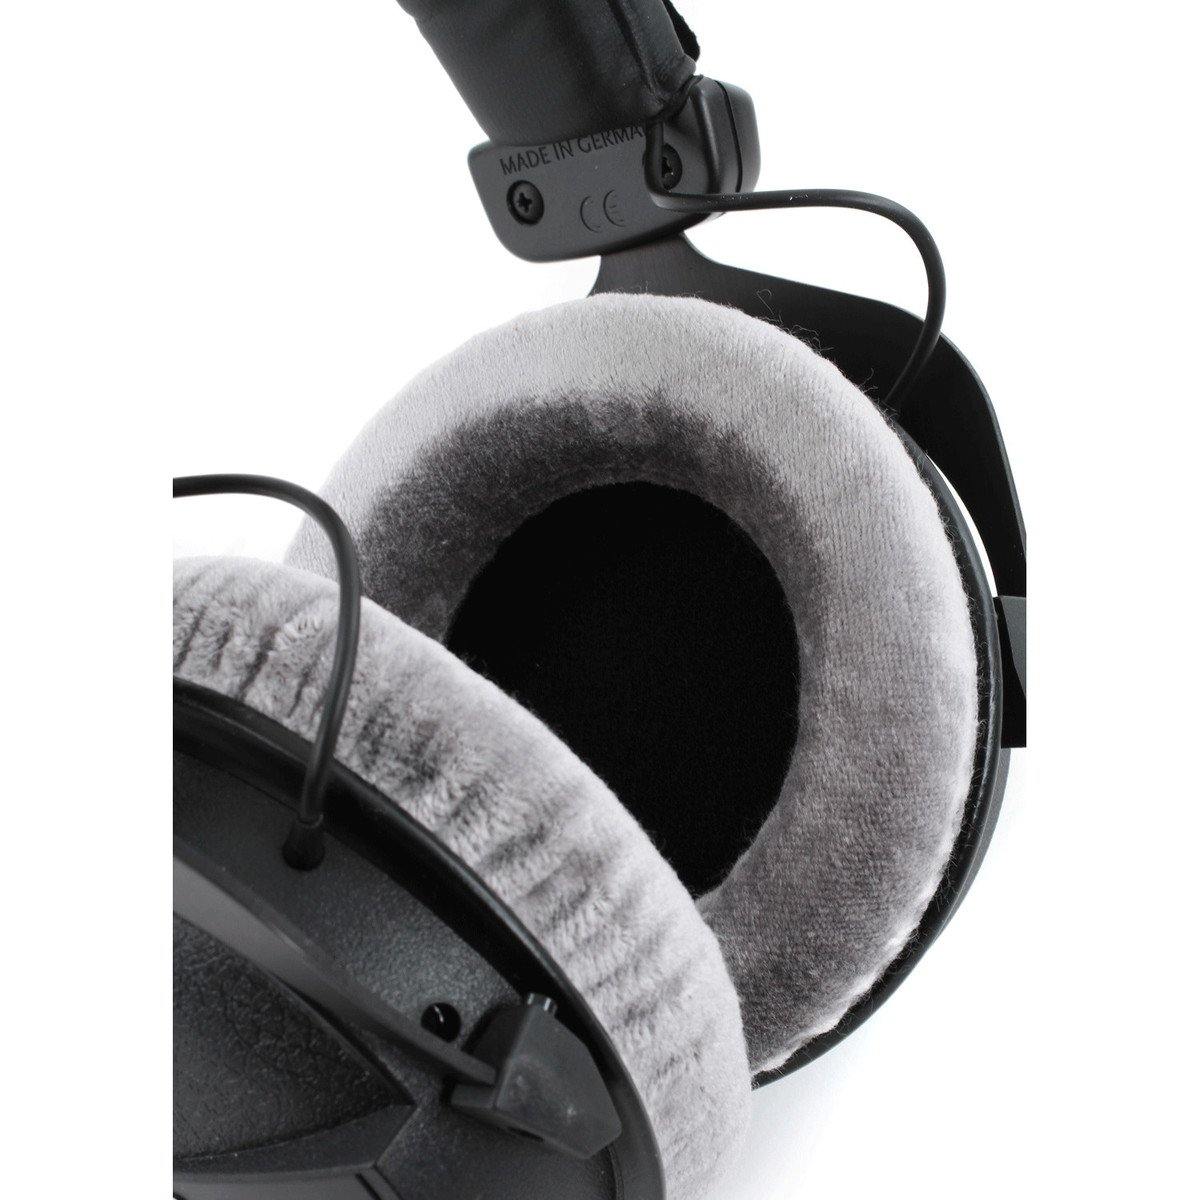 Beyerdynamic DT 770 Pro 80 Ohm Closed Back Headphones - DY Pro Audio